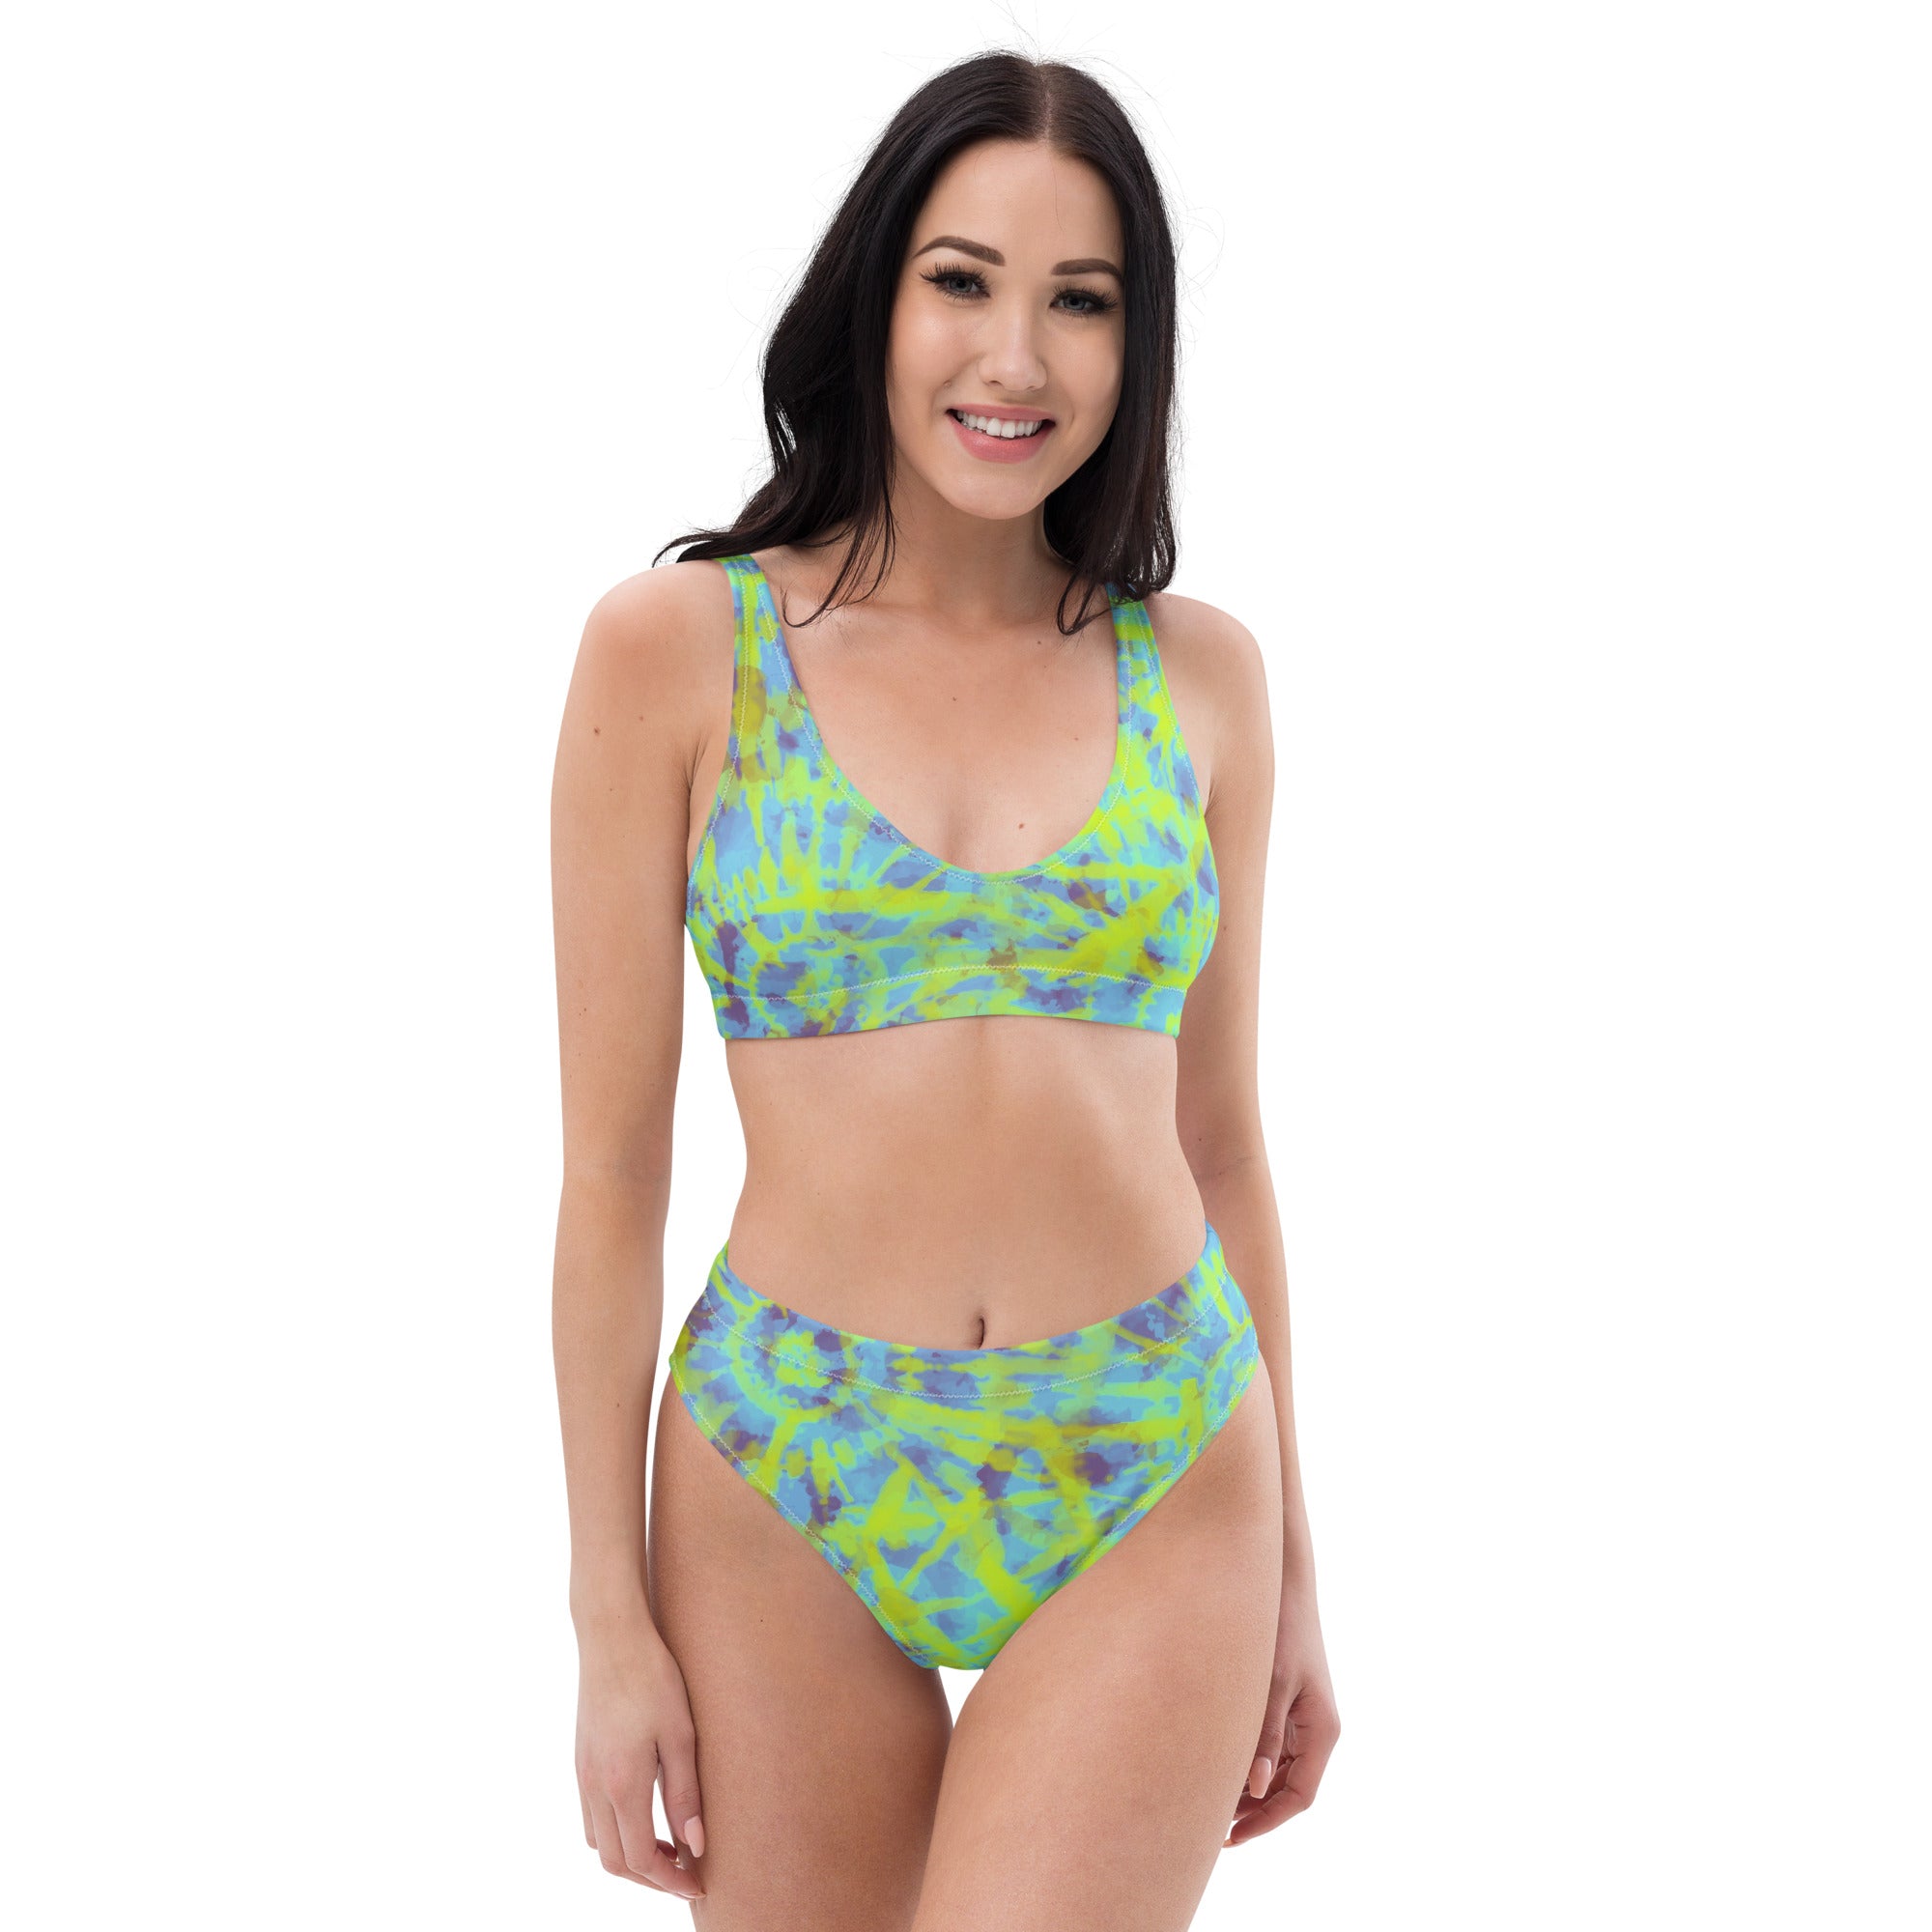 Recycled high-waisted bikini- Hang Loose Tie Dye Pattern 01